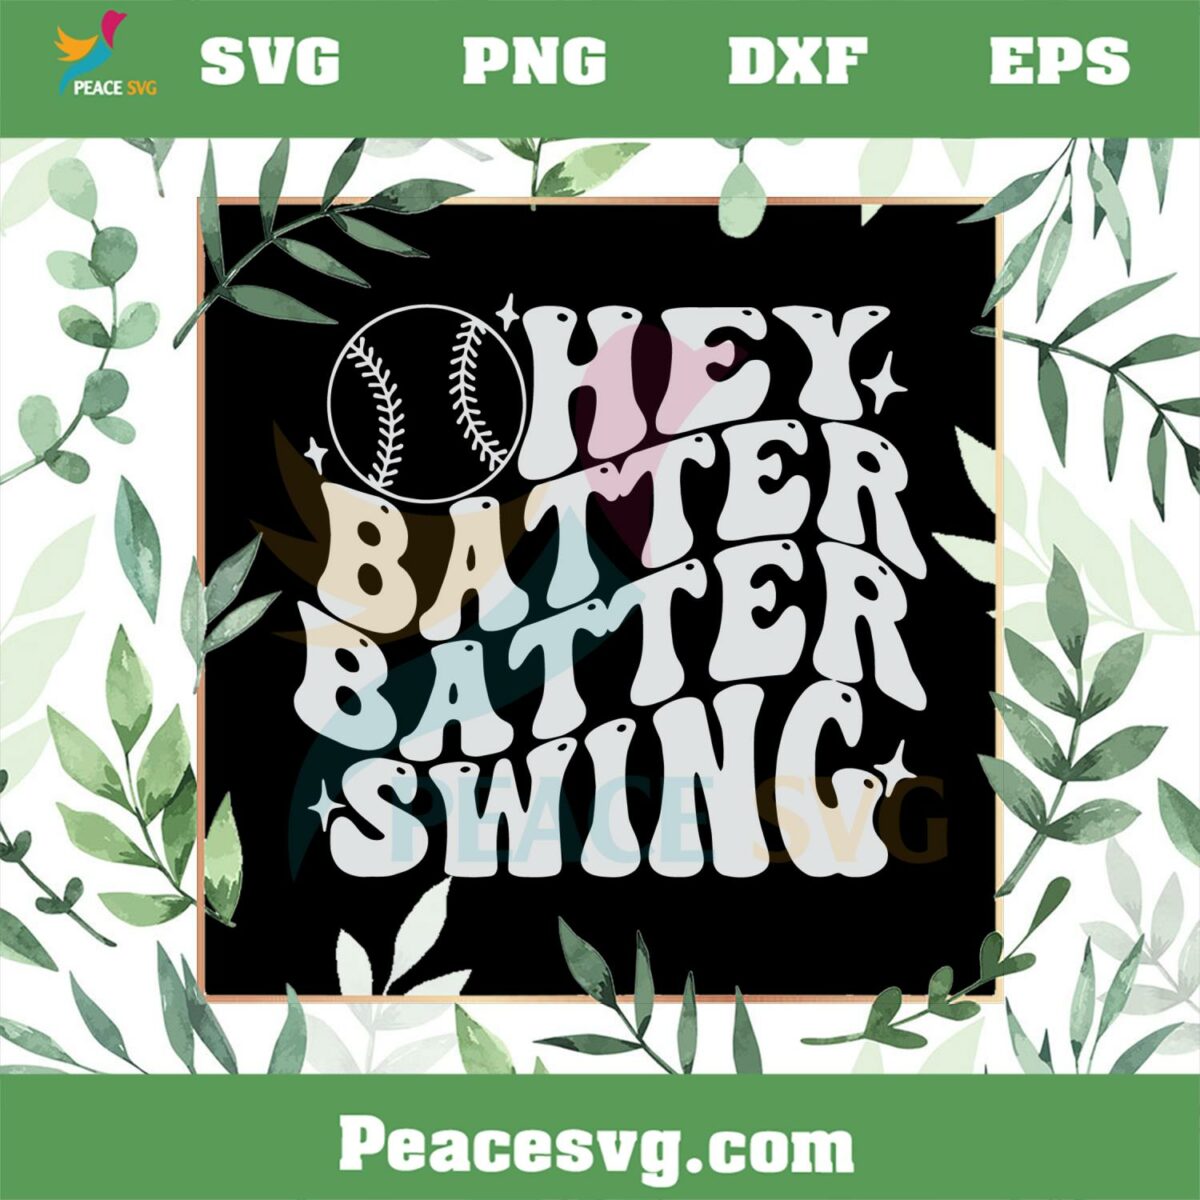 Hey Batter Batter Swing Silhouette Baseball Mom SVG Cutting Files